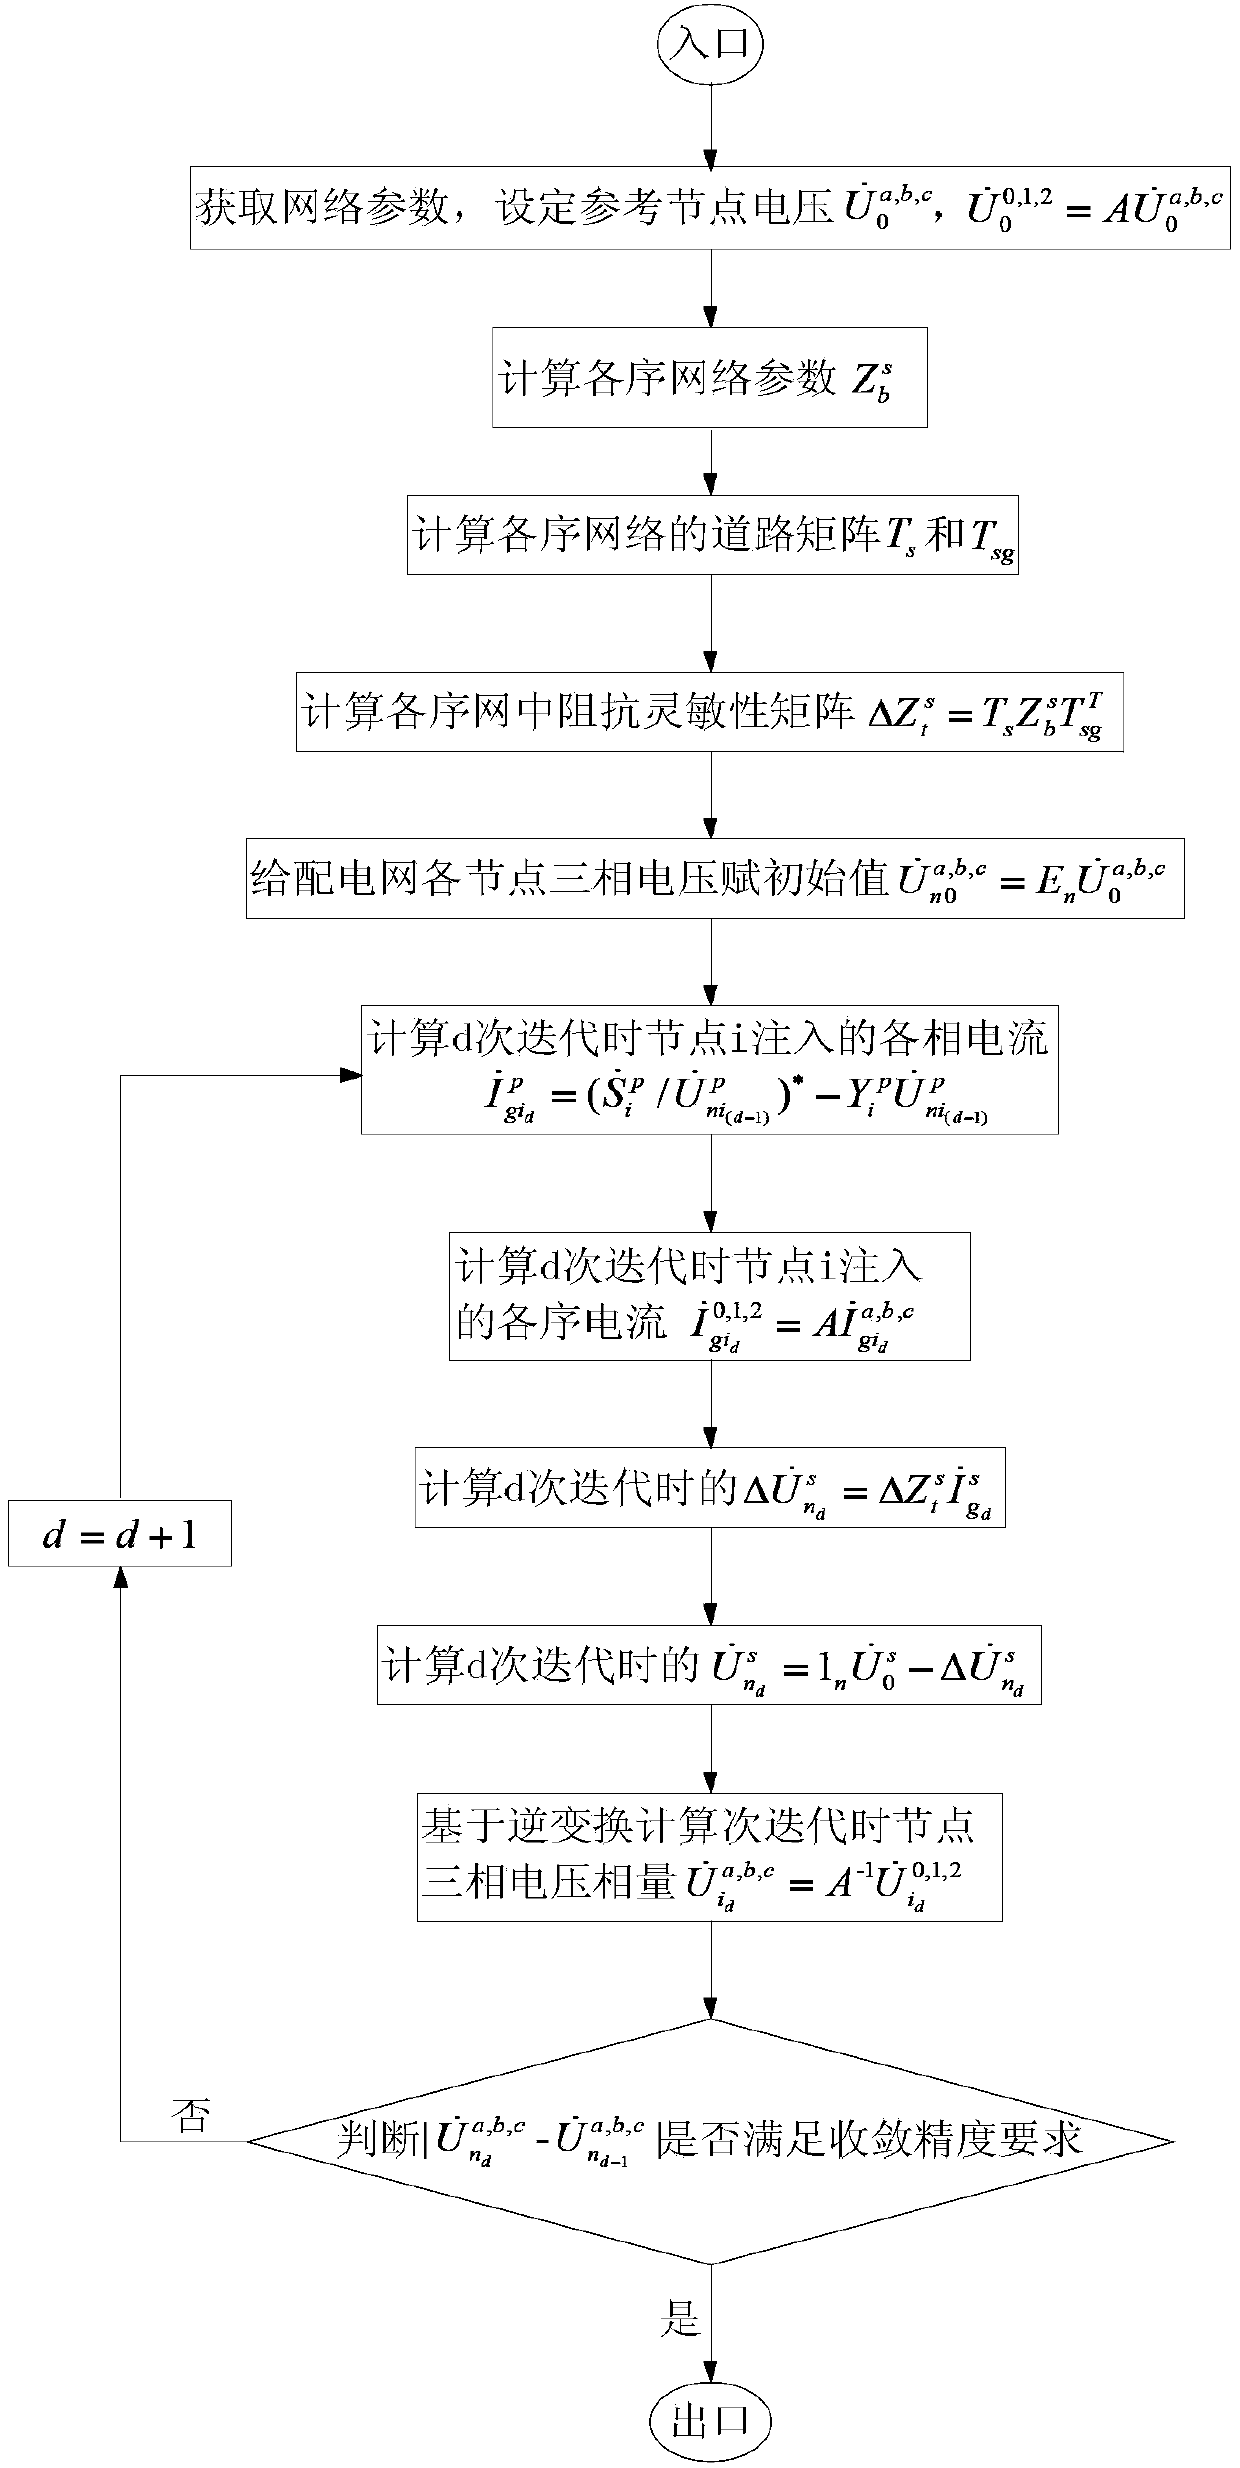 Three-phase decoupling load flow calculation method of power distribution network based on path matrix